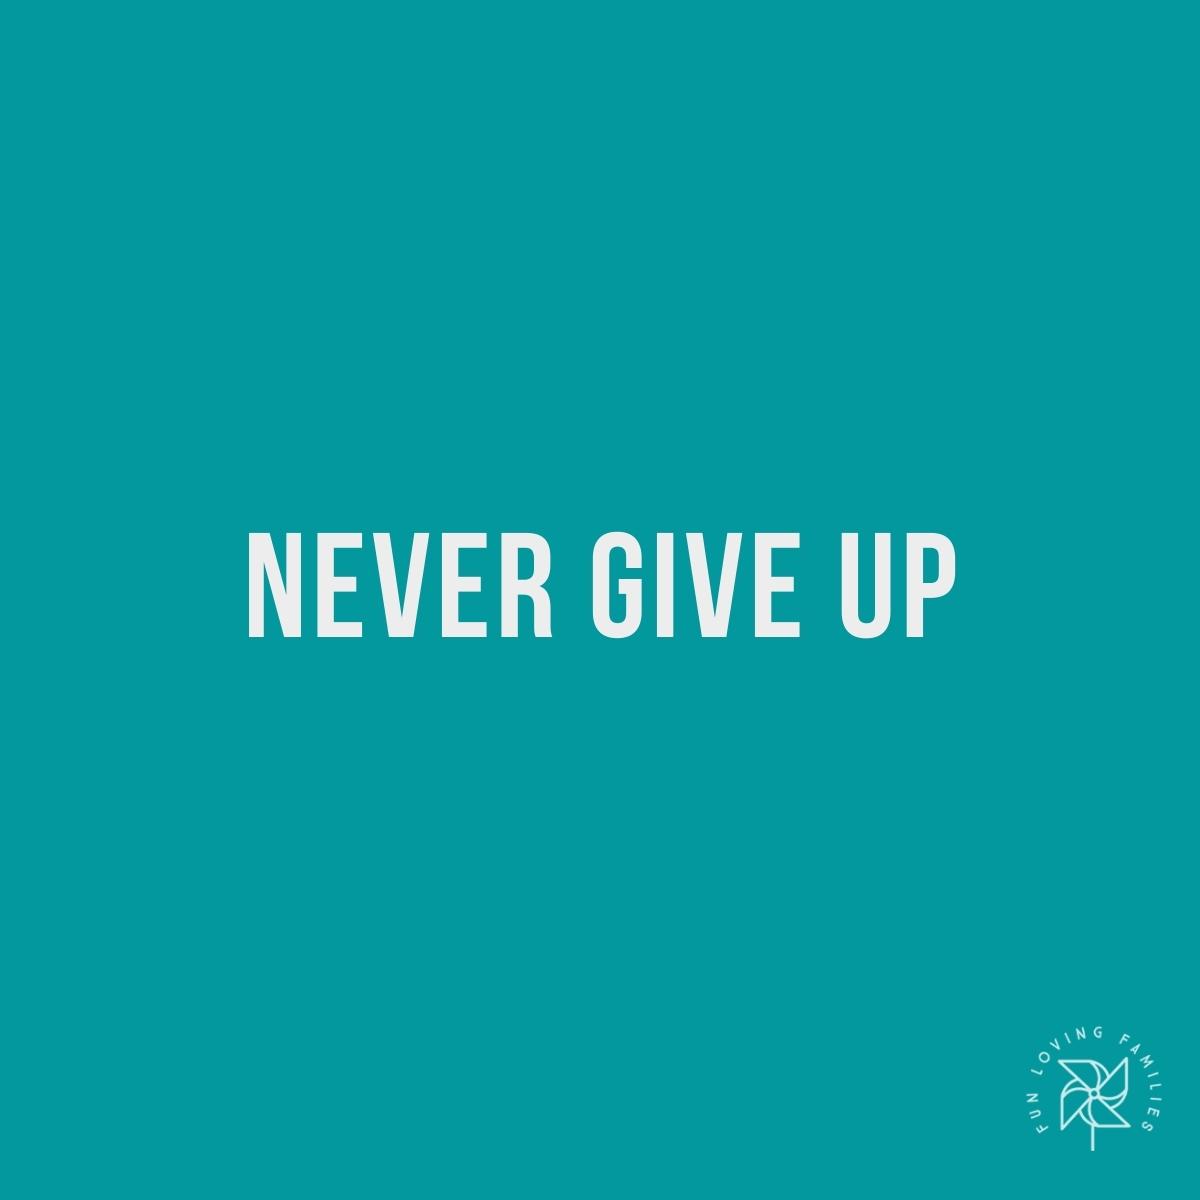 Never give up affirmation